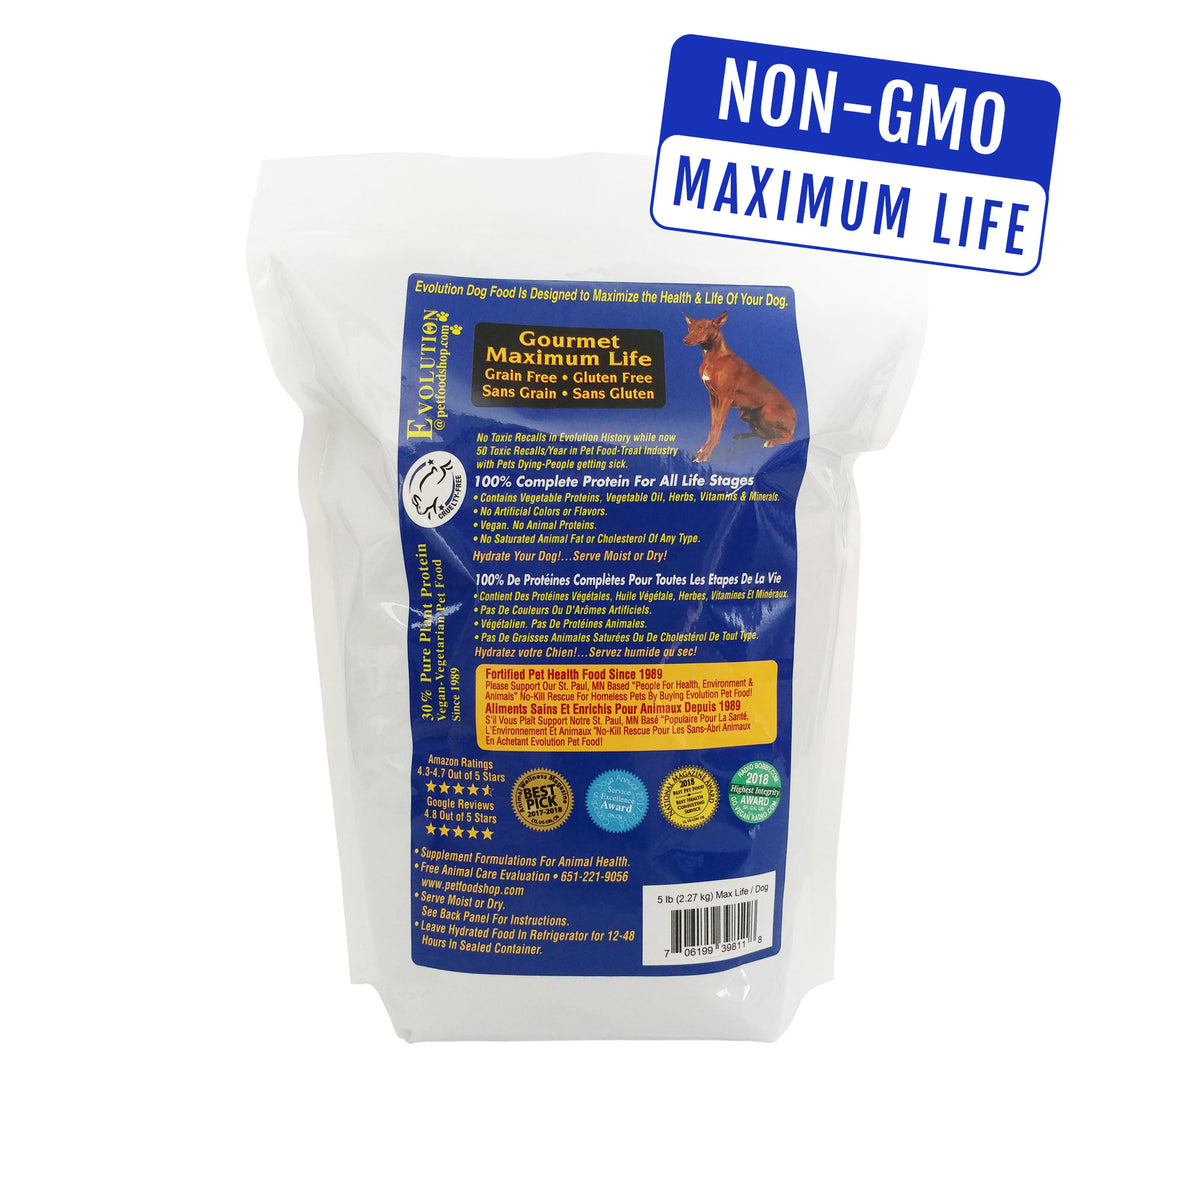 Non-GMO pet food